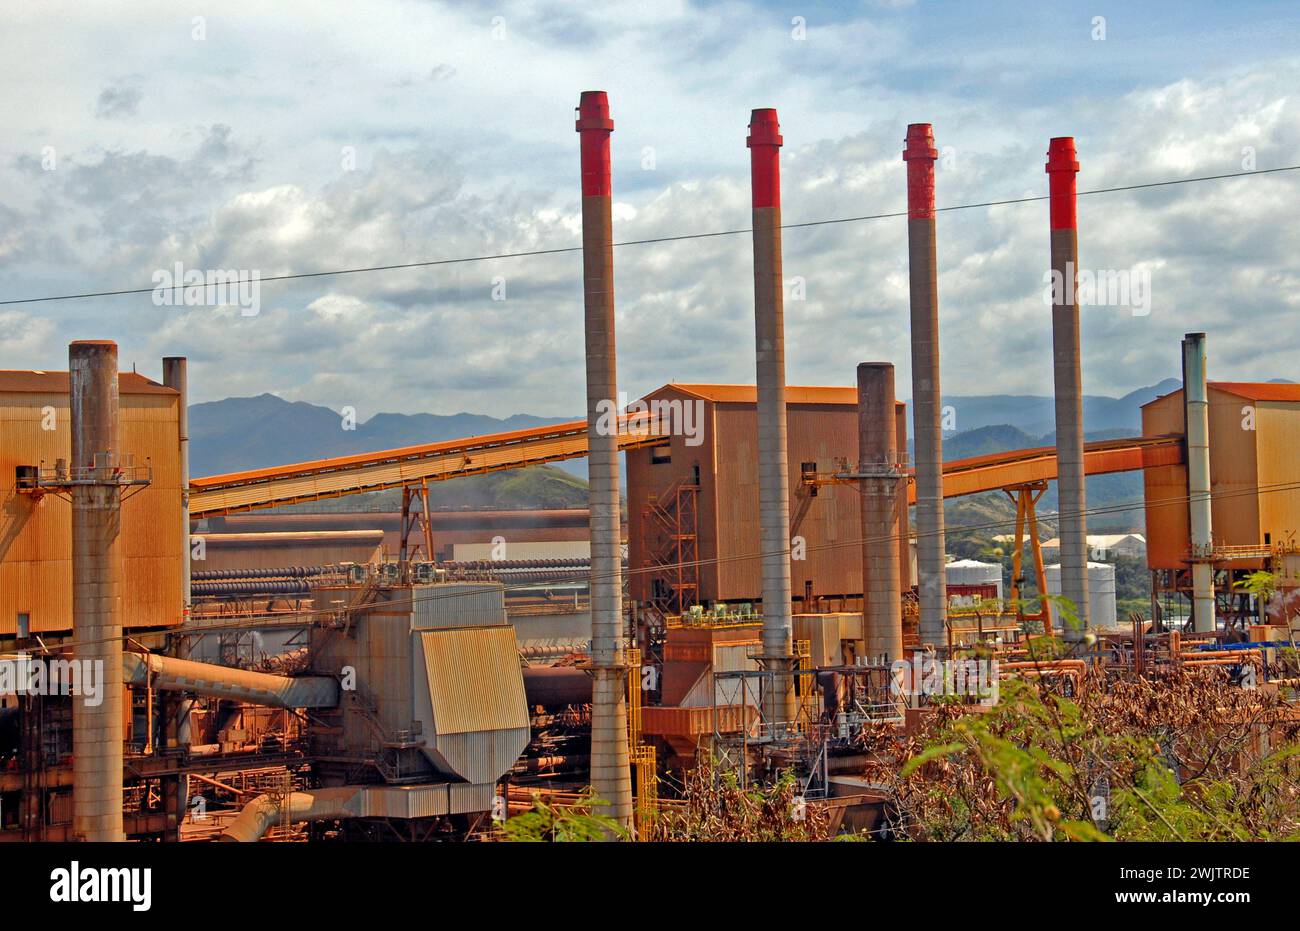 nickel factory, Noumea, New Caledonia Stock Photo